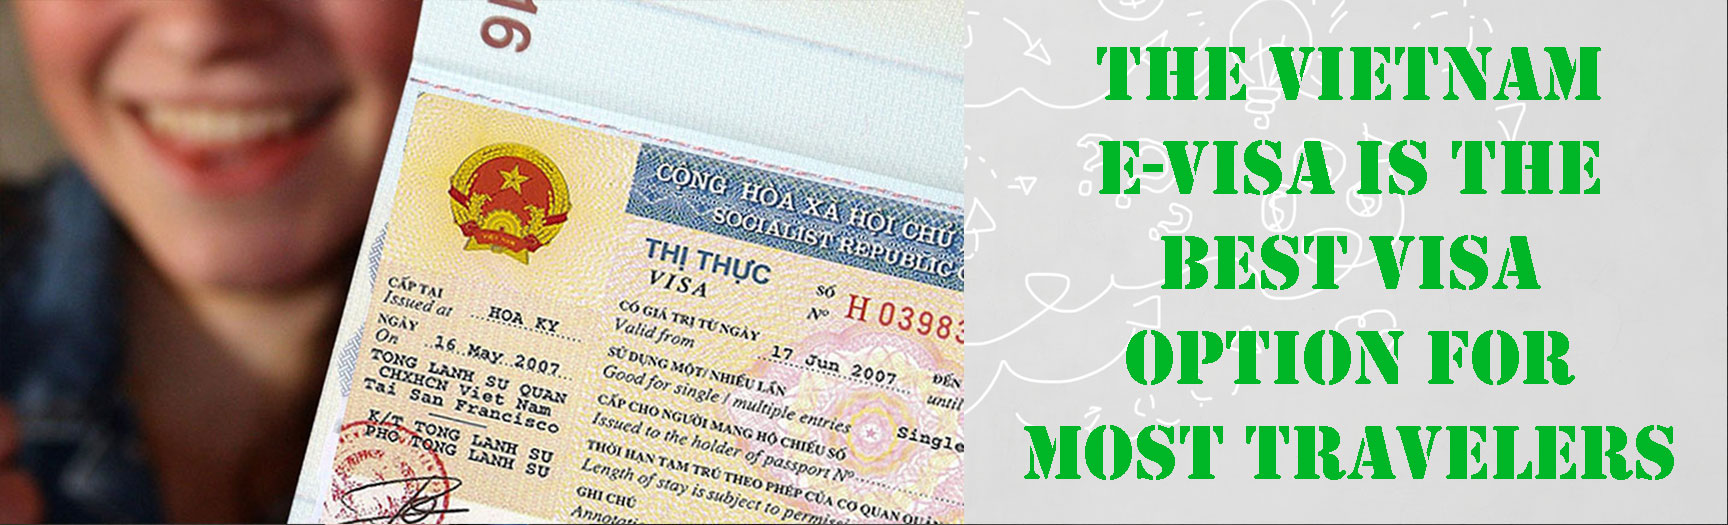 Vietnam E Visa Is The Best Visa Option For Most Travelers Saigon Tours 9930